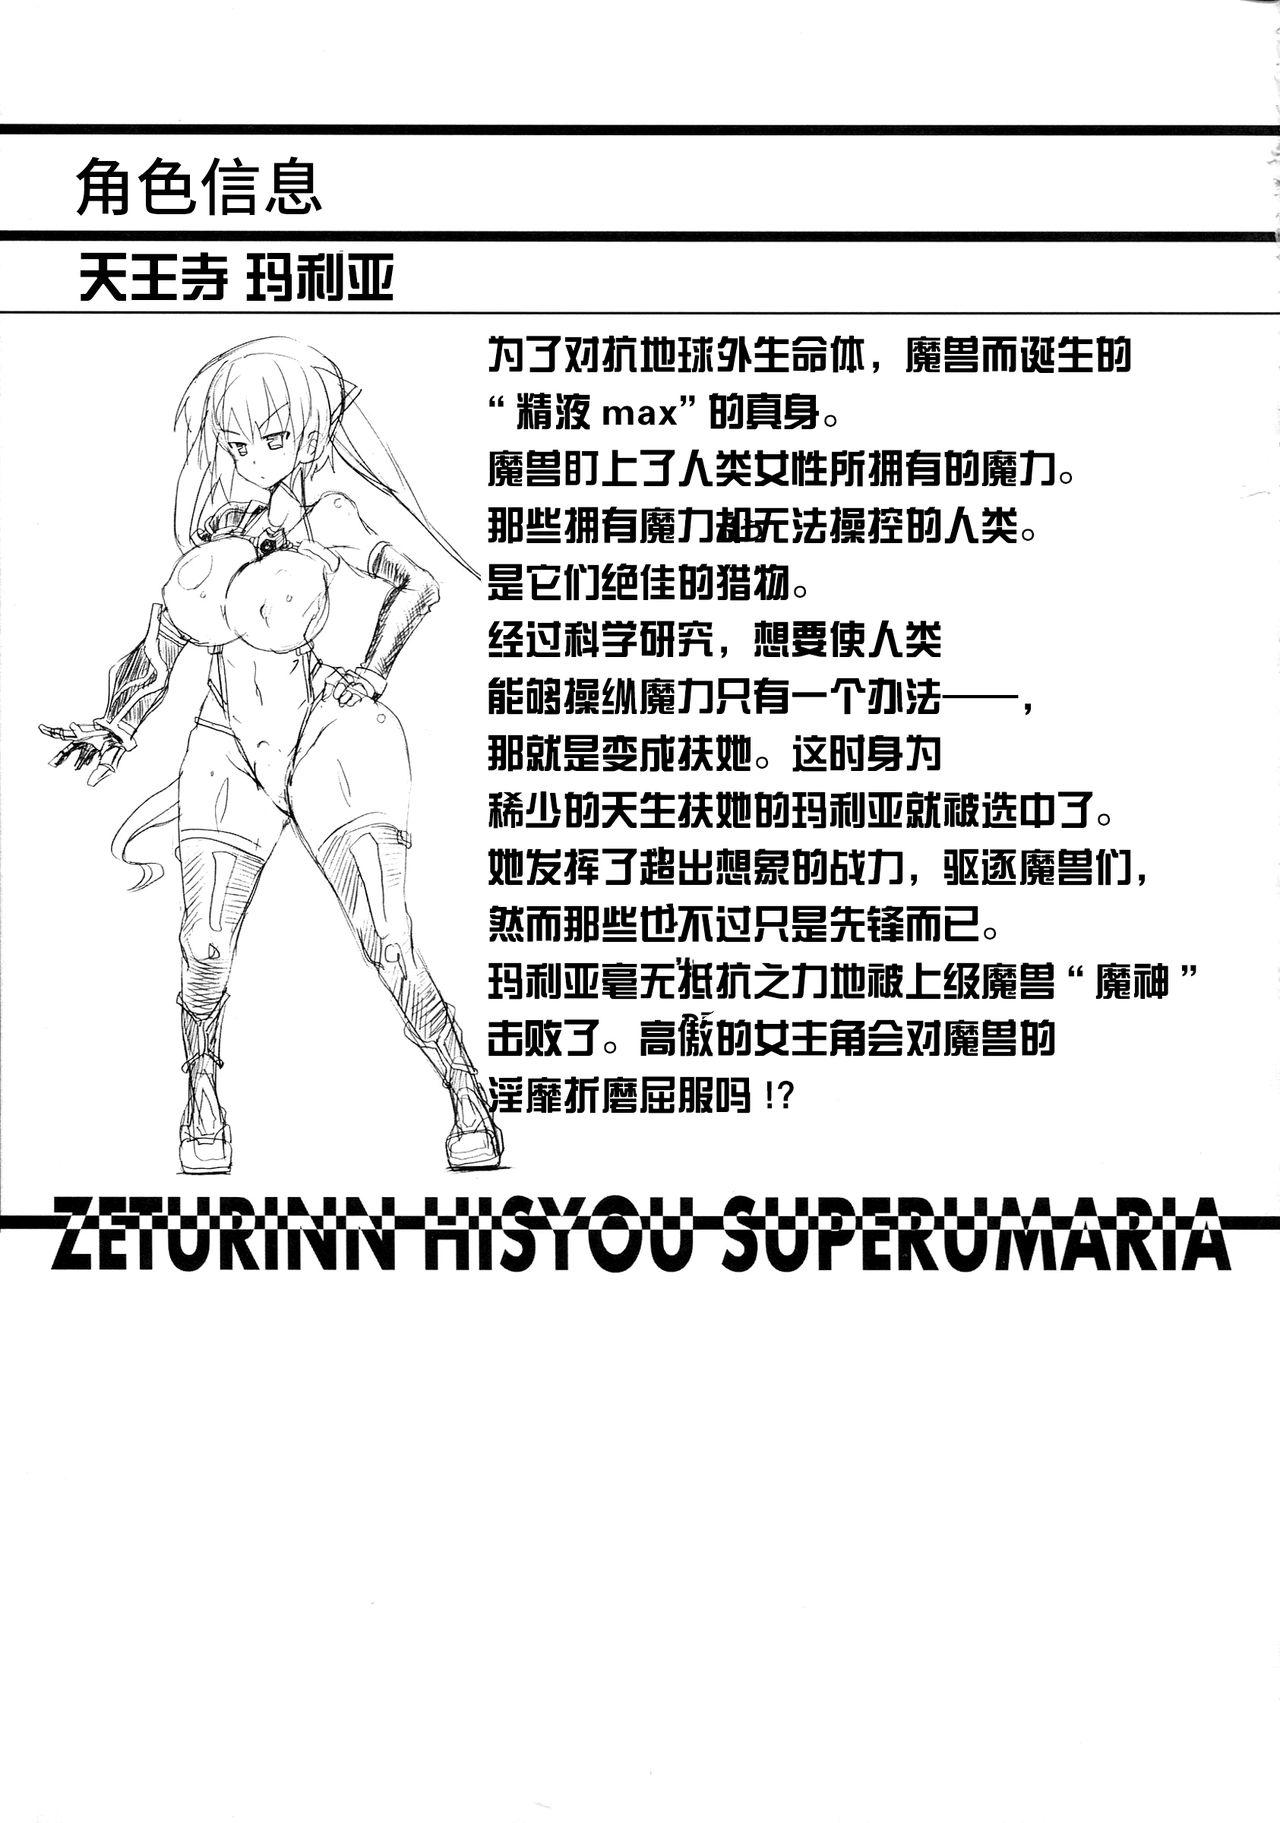 Zetsurin Hishou Spermax 4